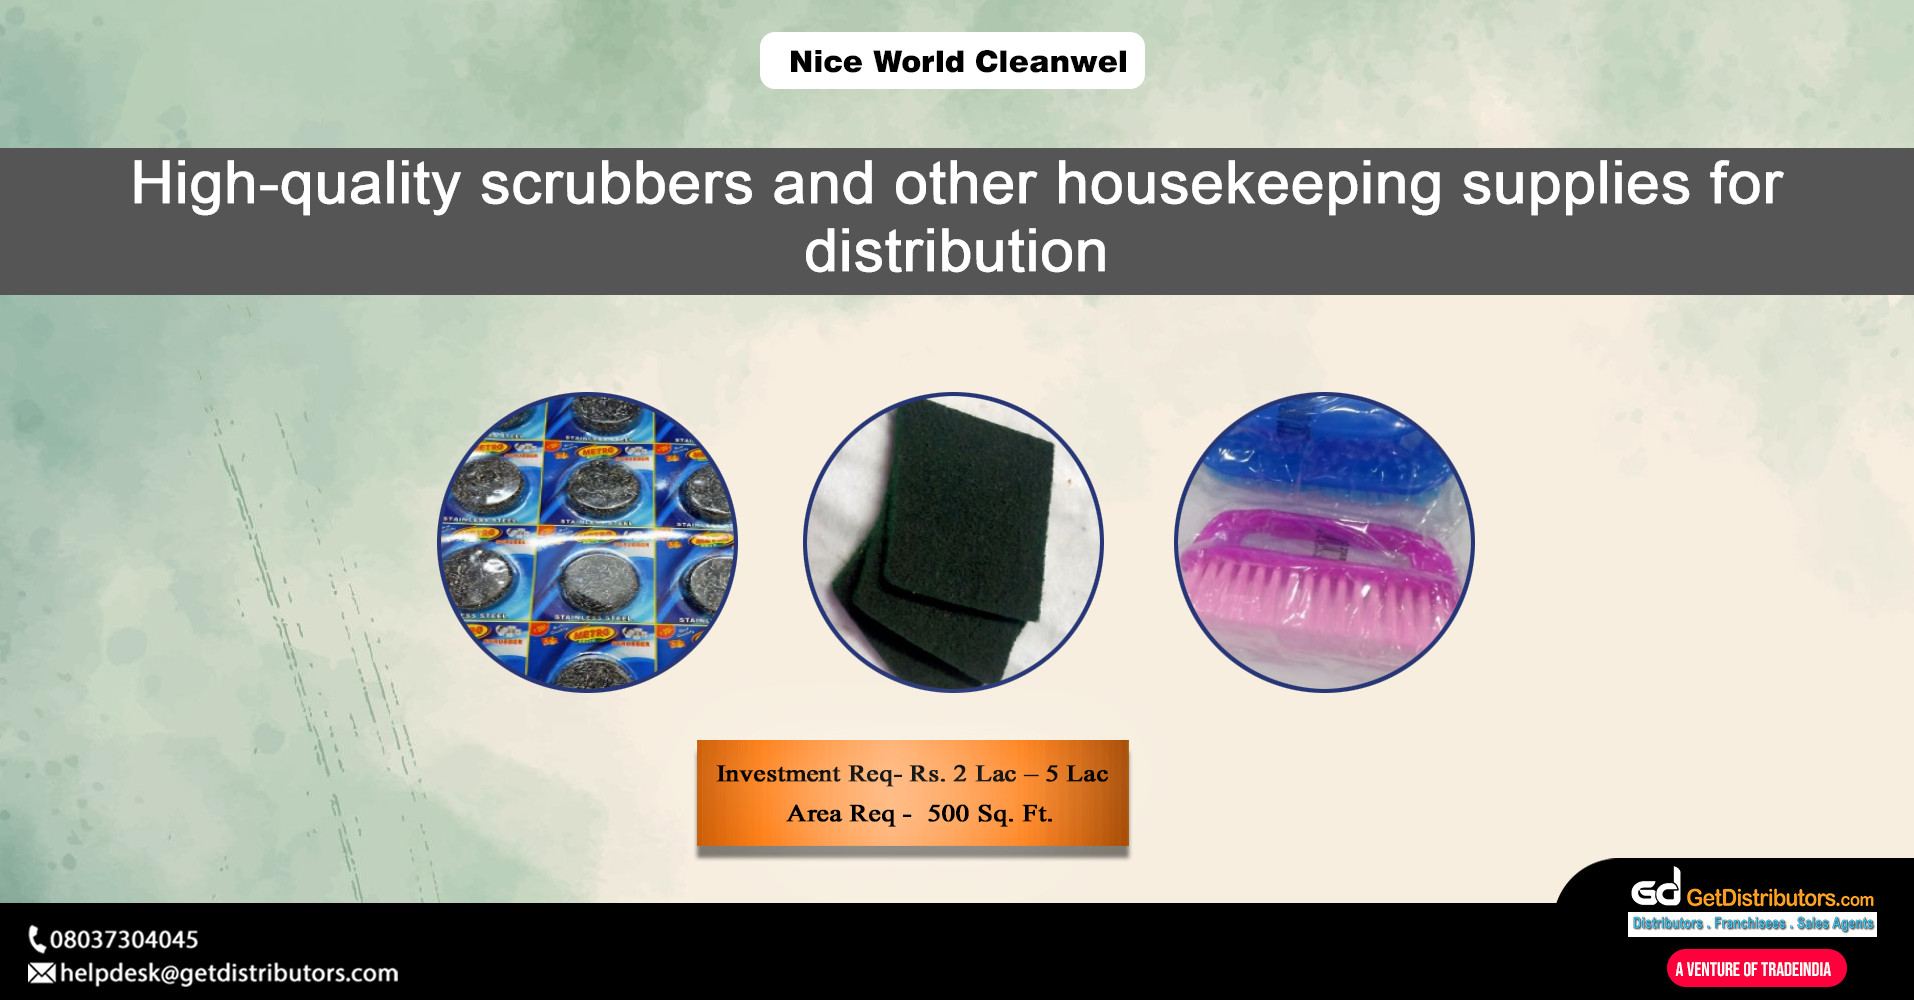 Nice World Cleanwel Blog